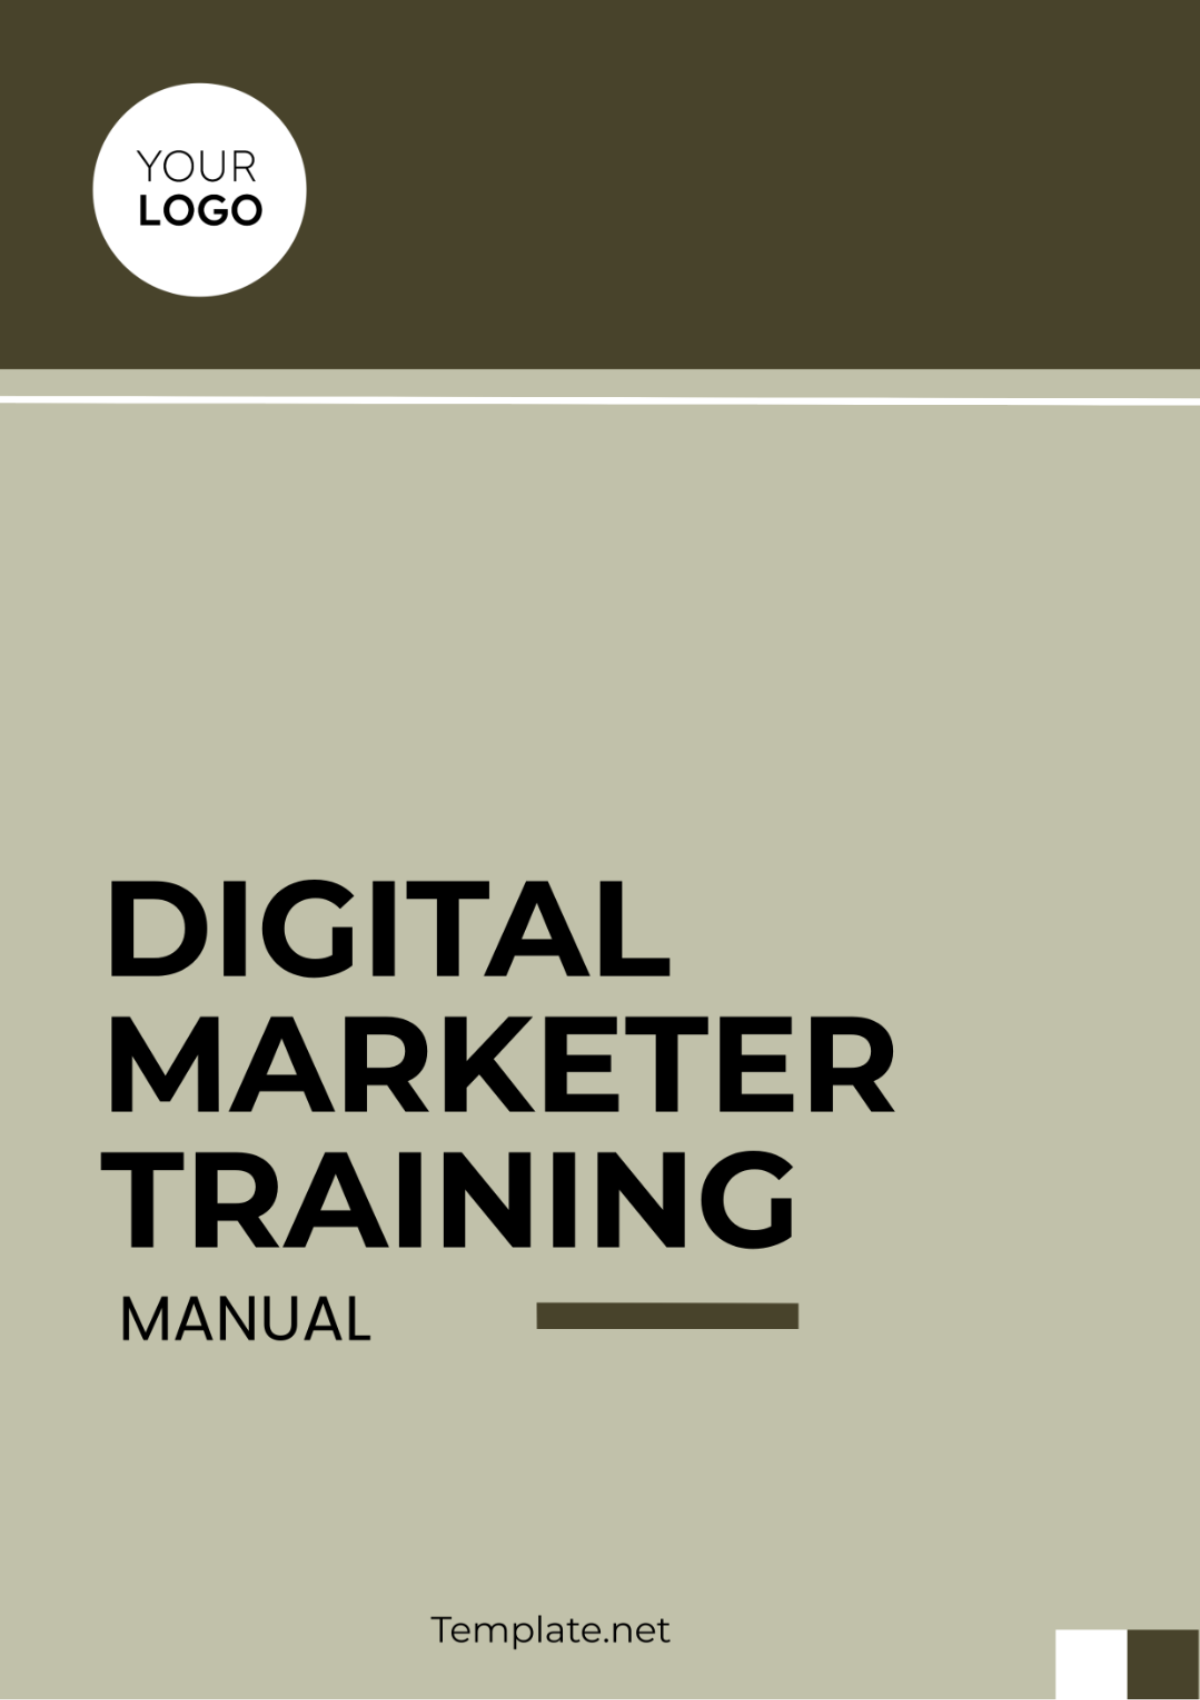 Digital Marketer Training Manual Template